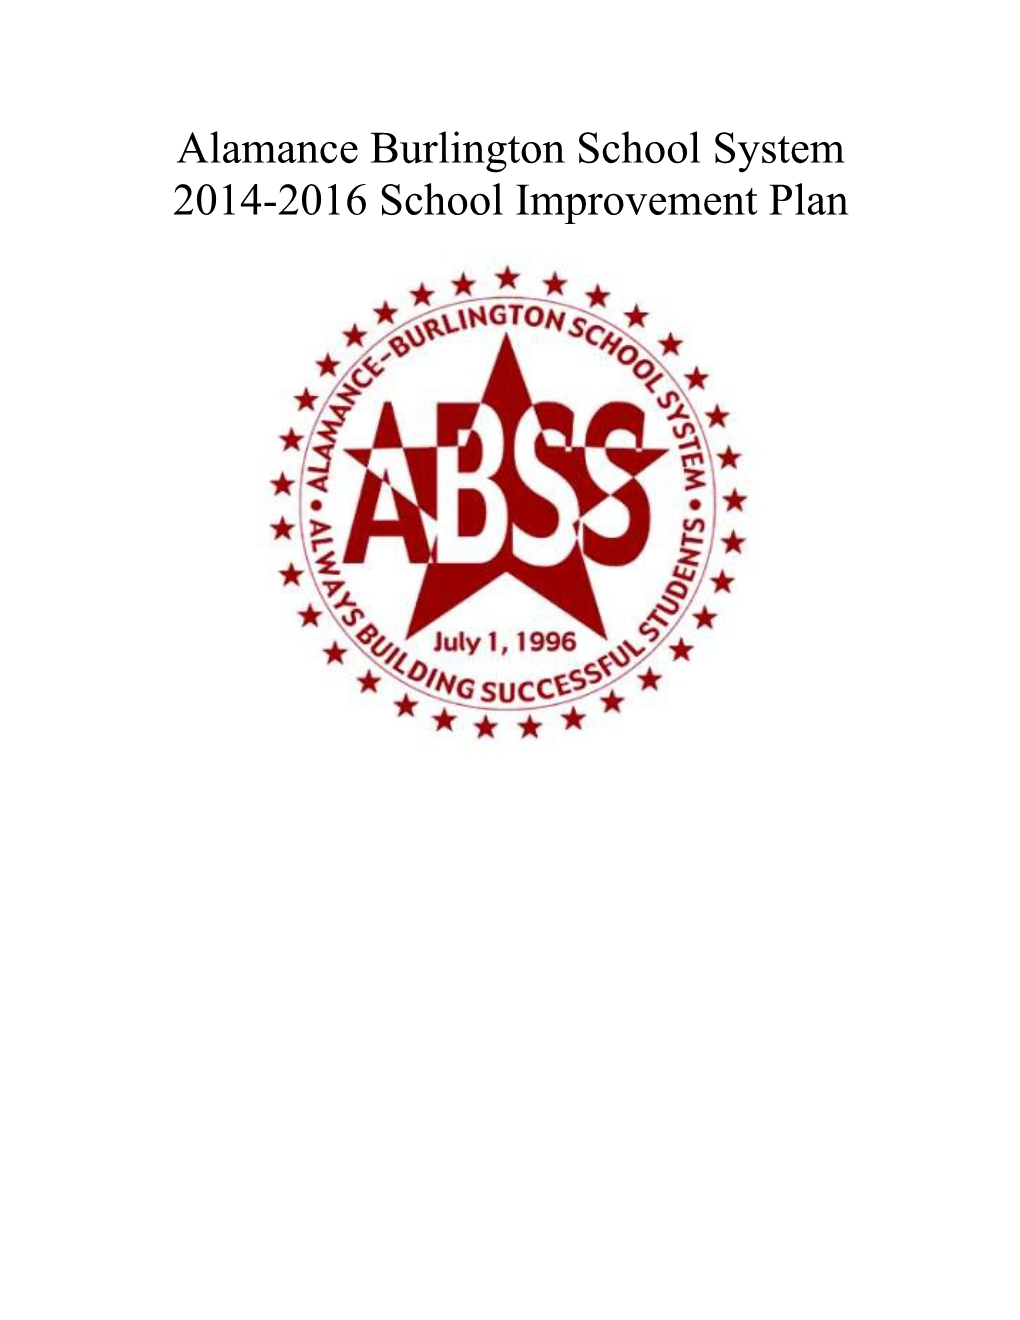 Alamance Burlington School System 2014-2016 School Improvement Plan